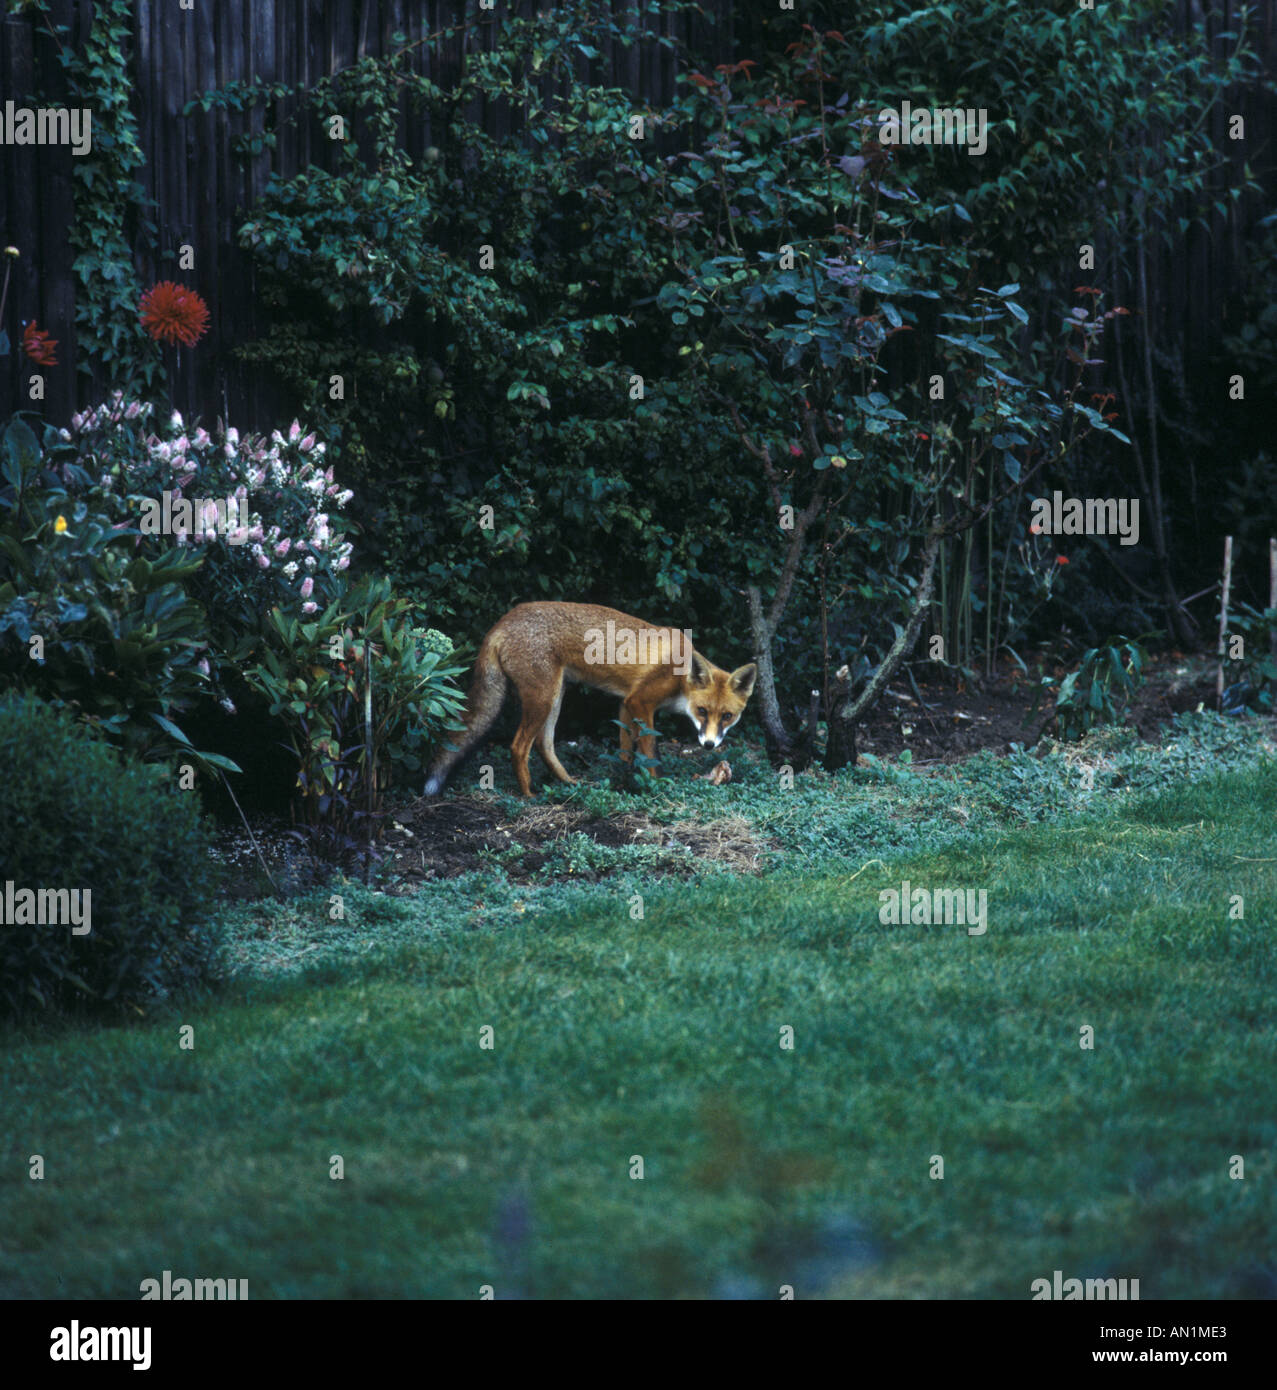 European Red Fox Vulpes vulpes Standing amongst shrubs in south London garden Stock Photo